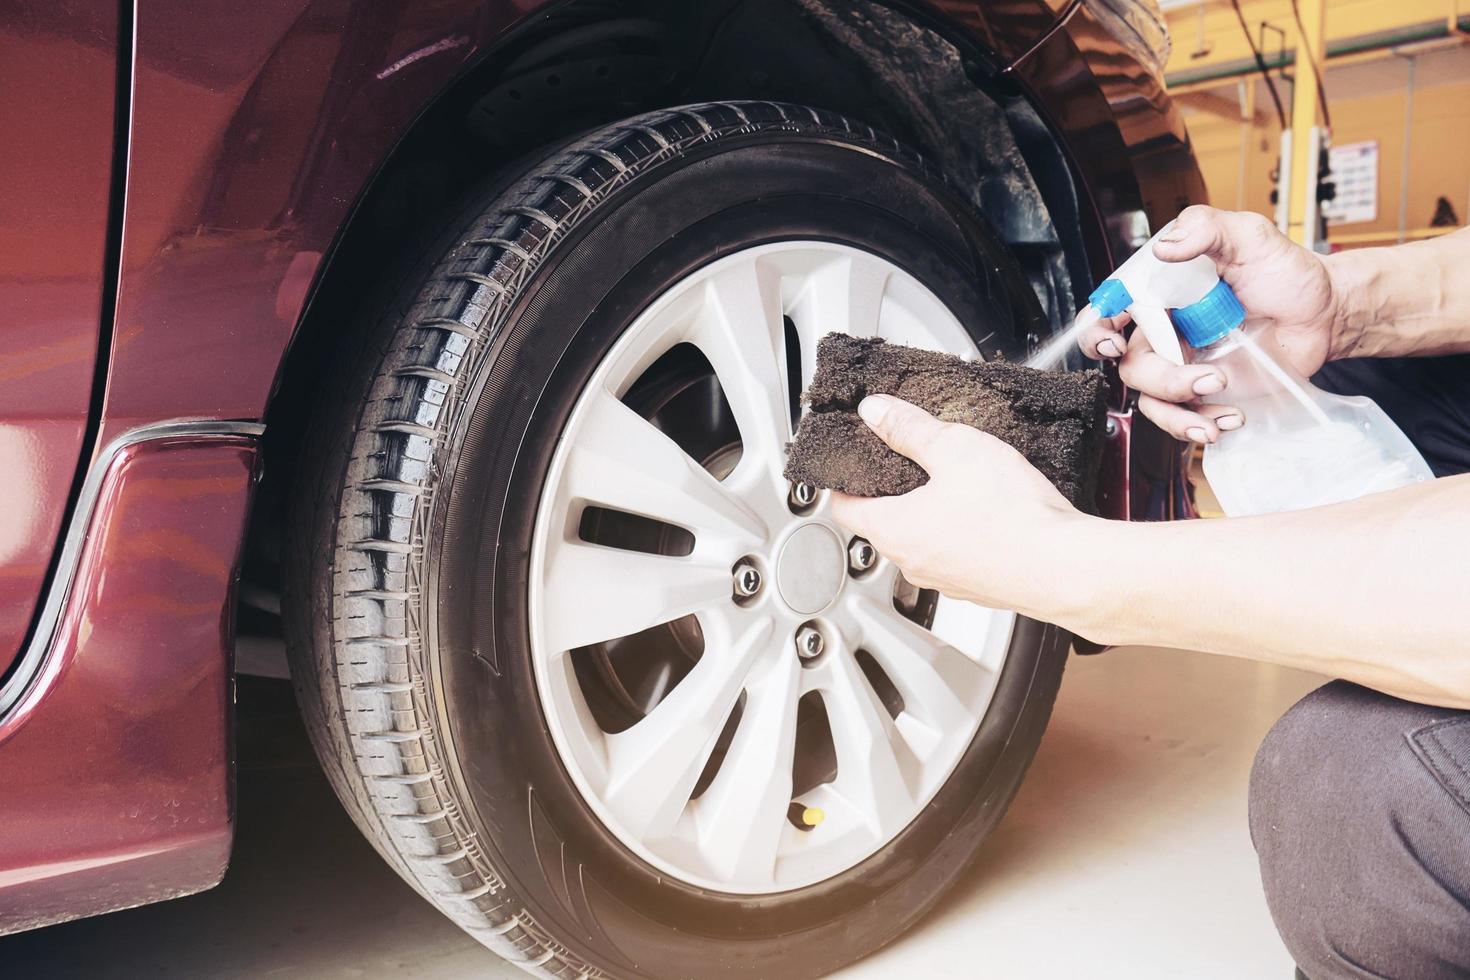 Service man is waxing car tire garage - car maintenance service concept photo